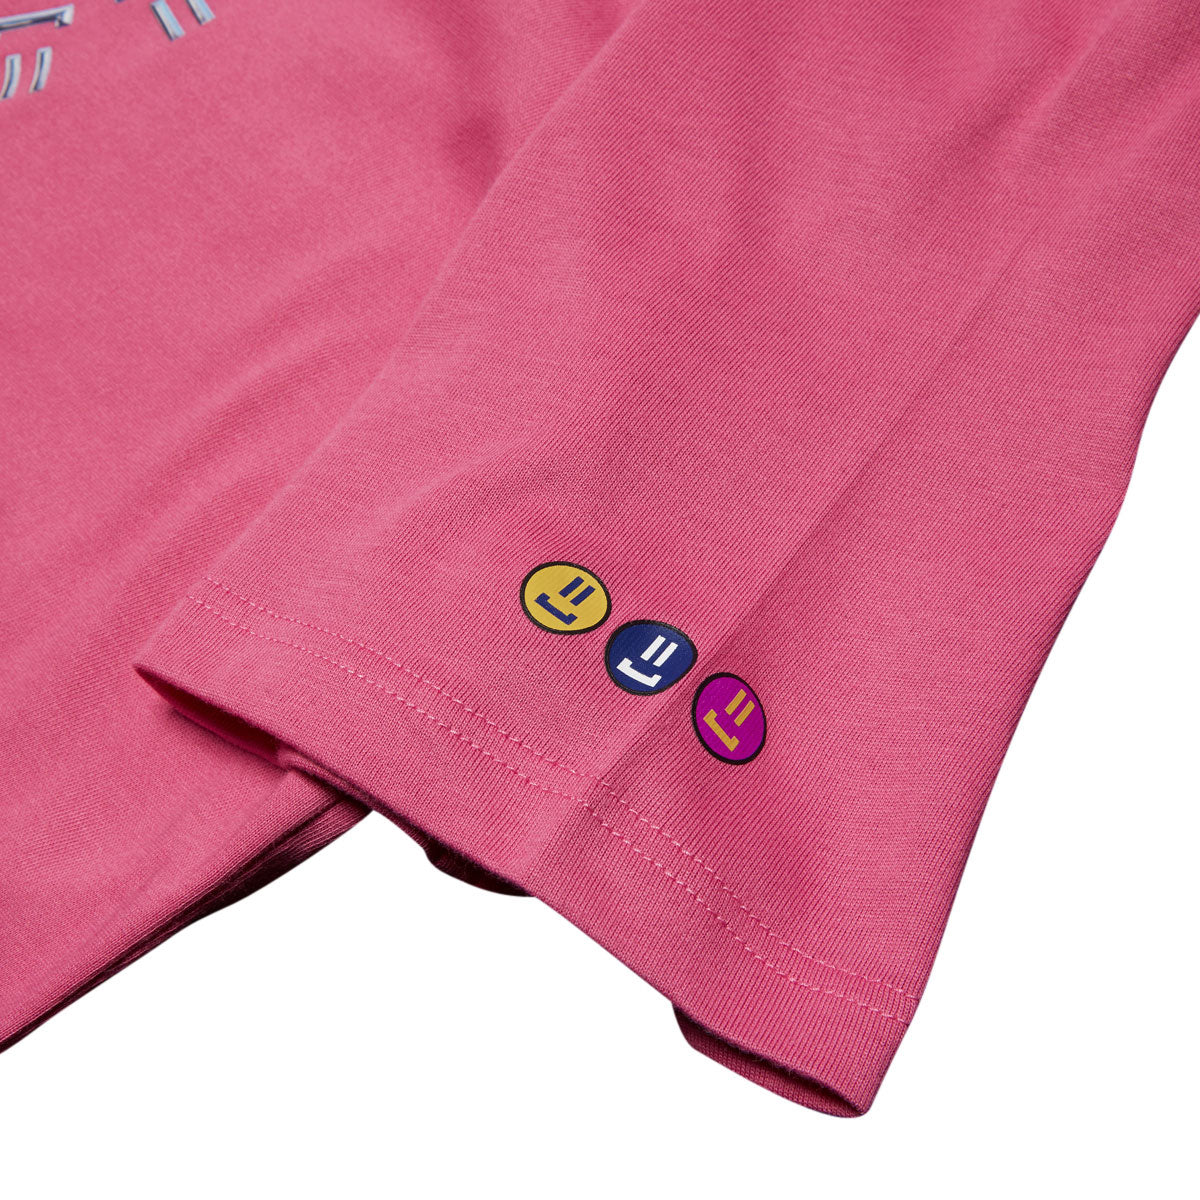 Nike SB Womens x Rayssa Leal T-Shirt - Pinkfire II image 4